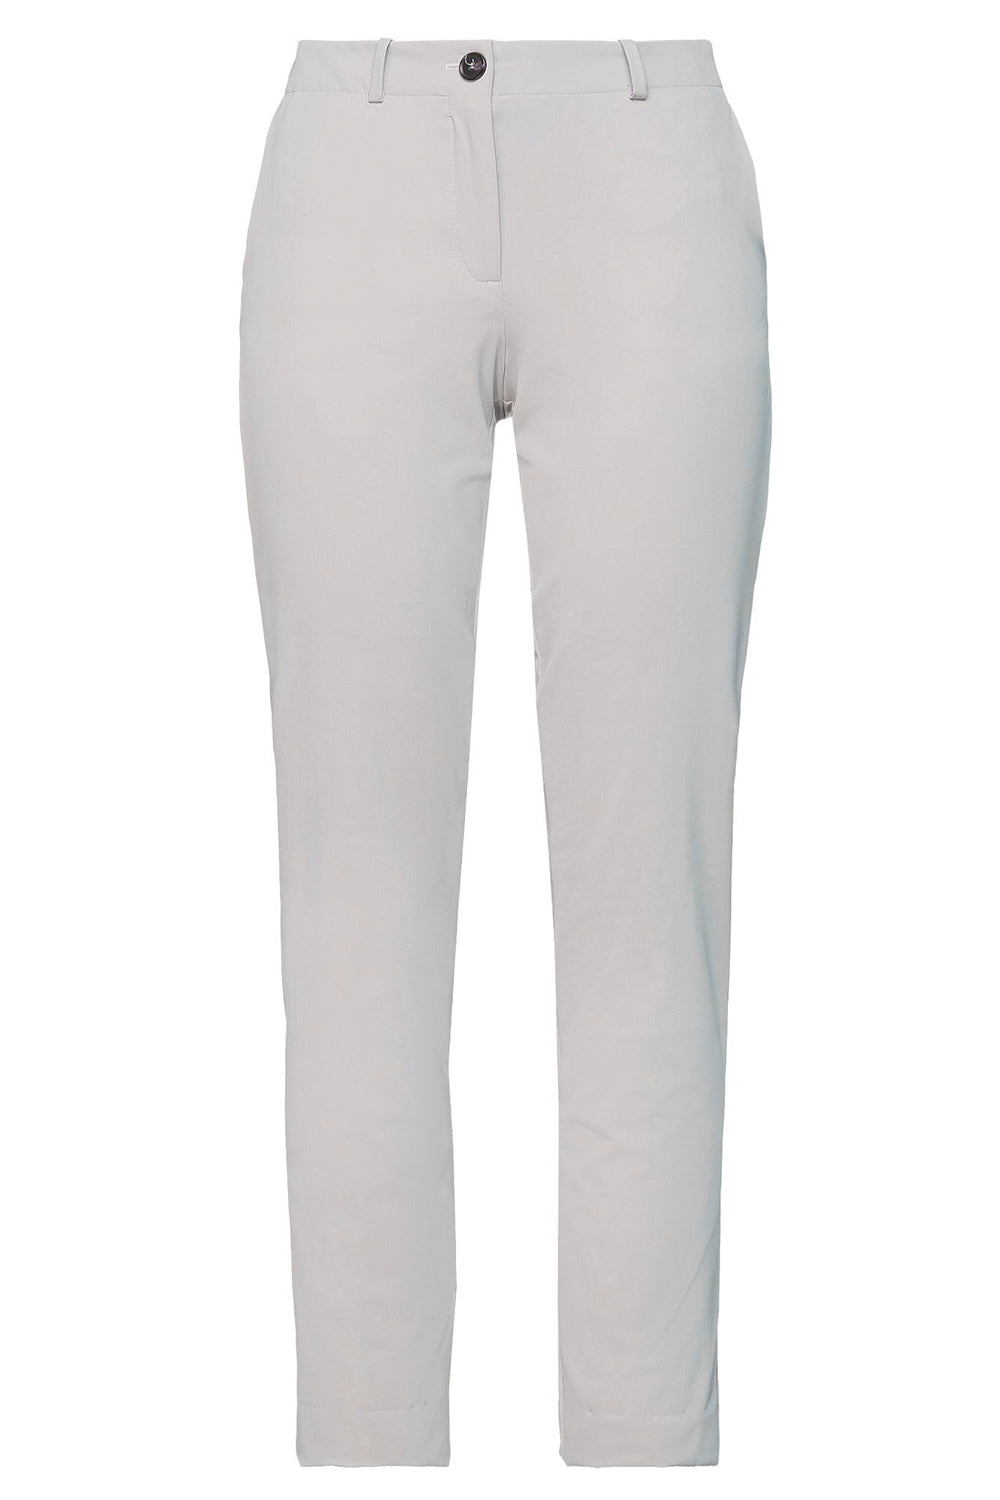 Image of Pantalone modello capri - RRD